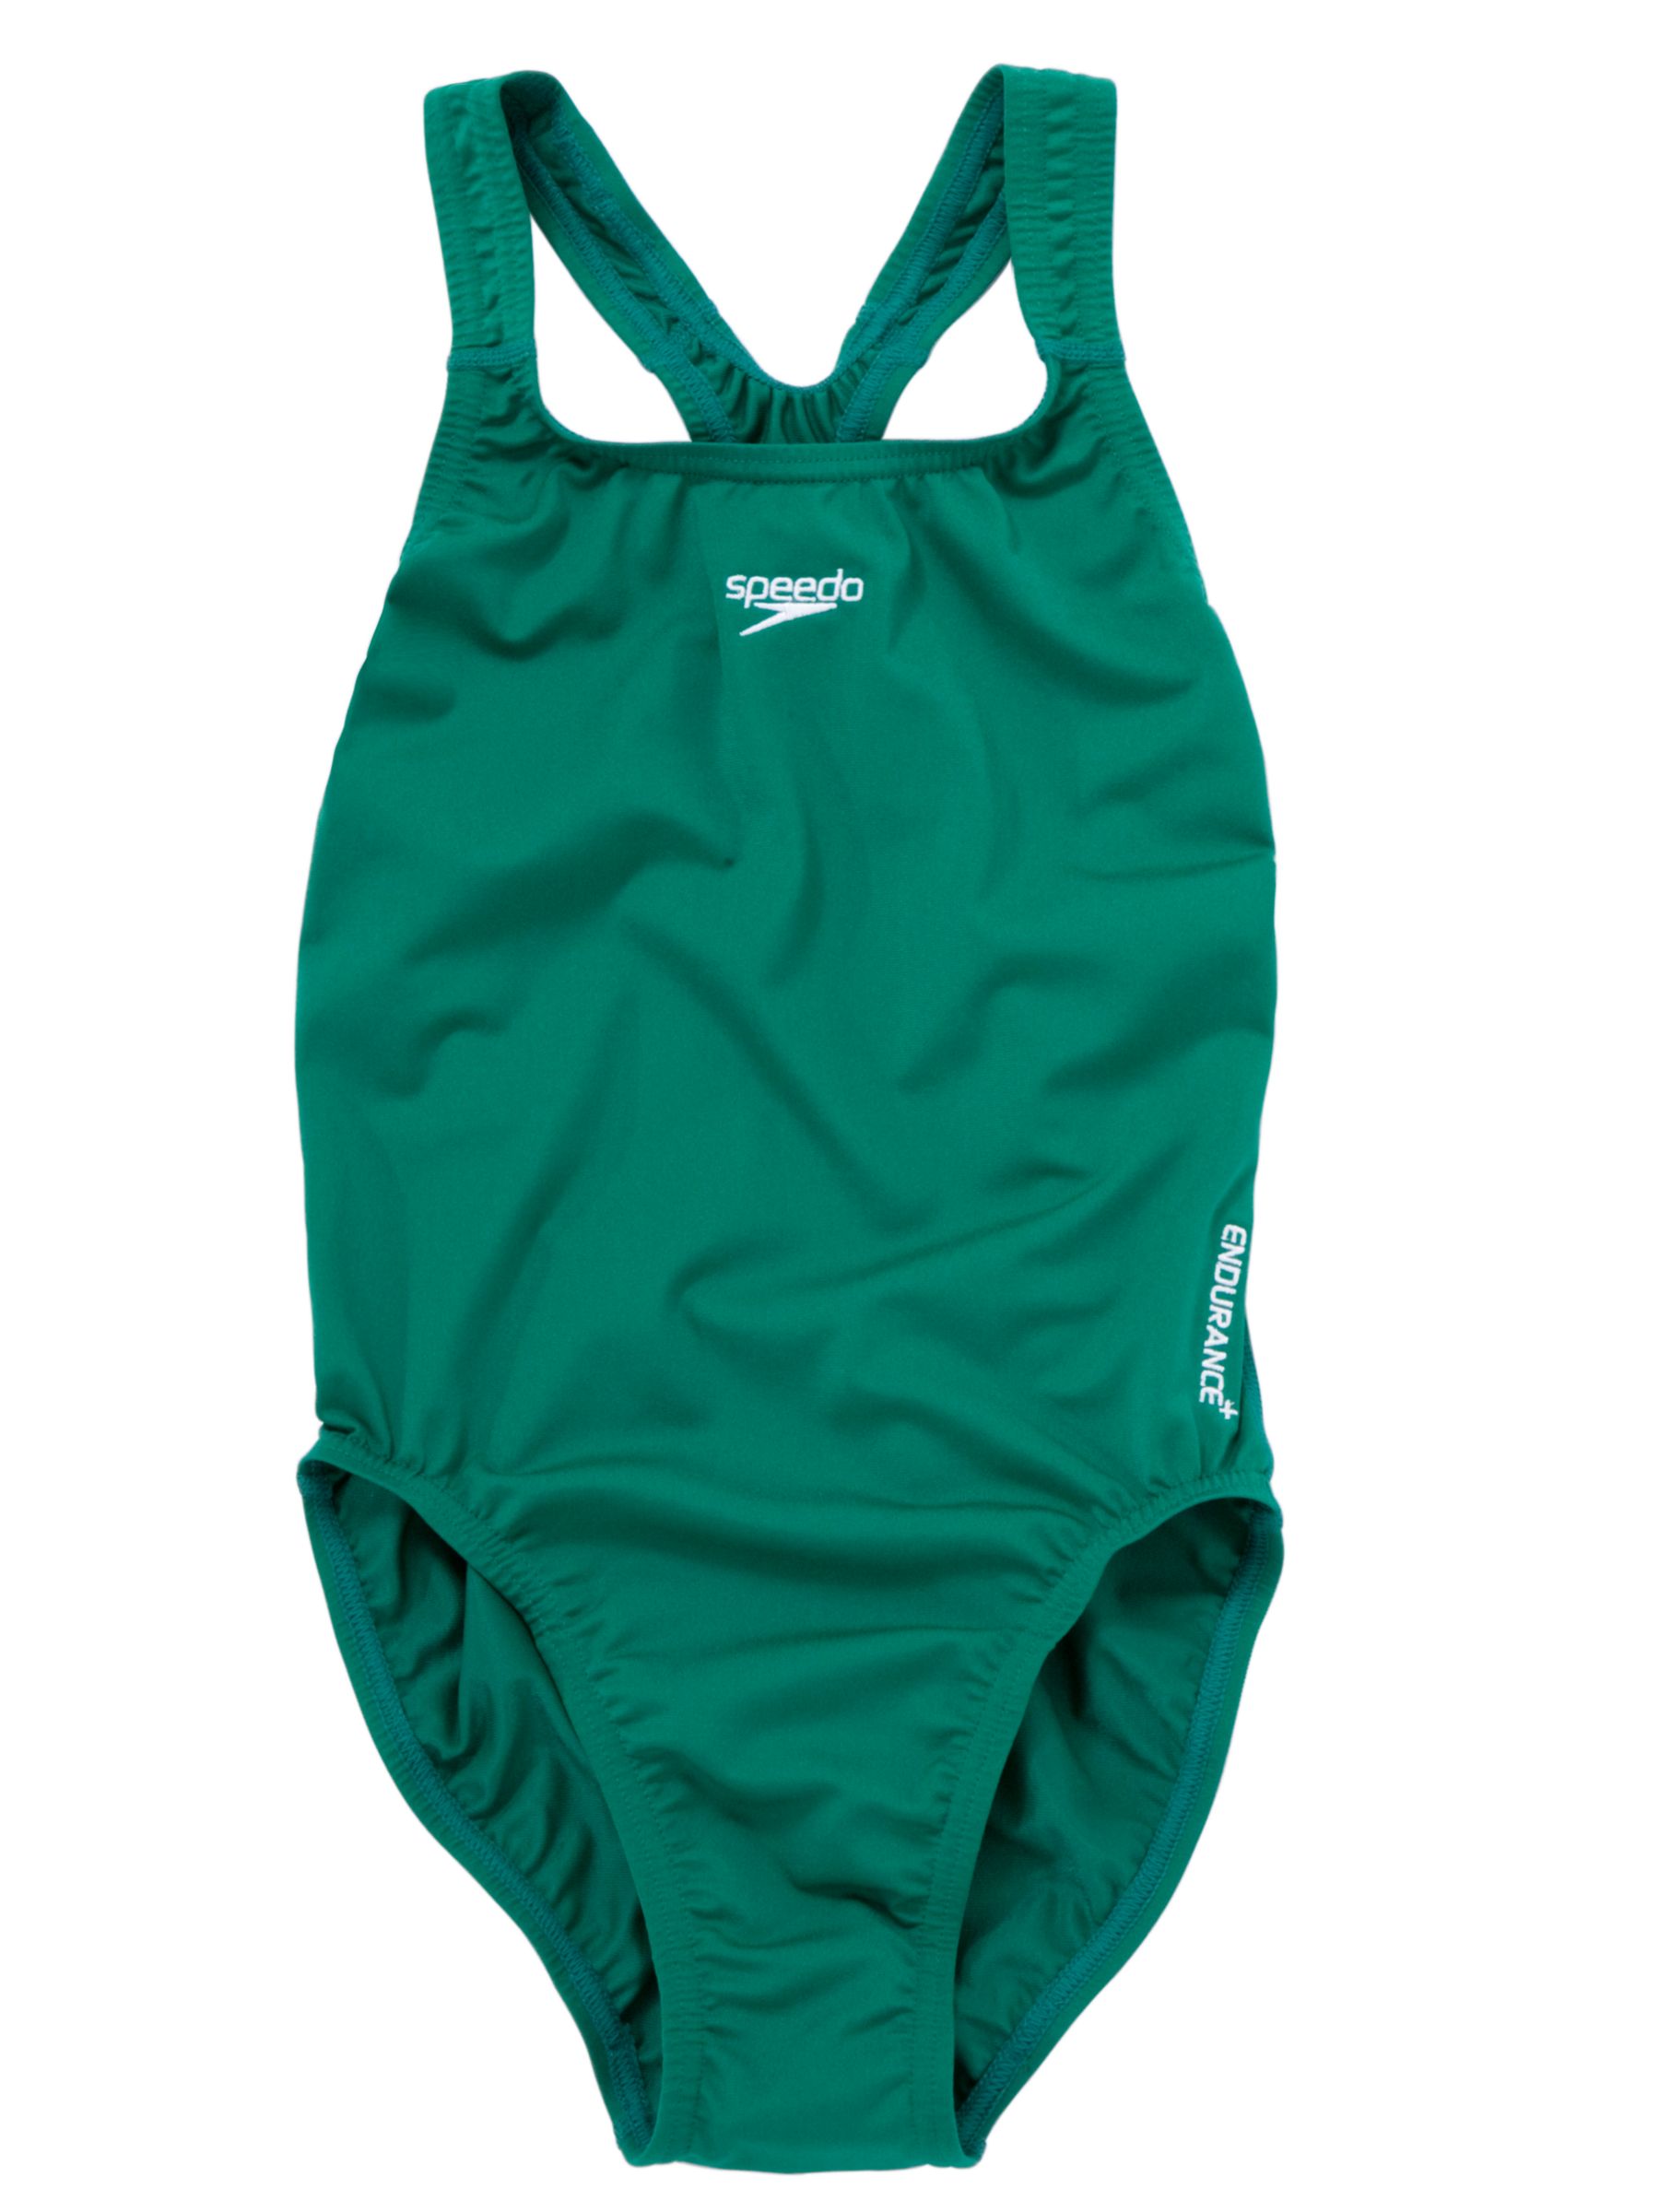 Speedo Medalist Swimsuit, Green